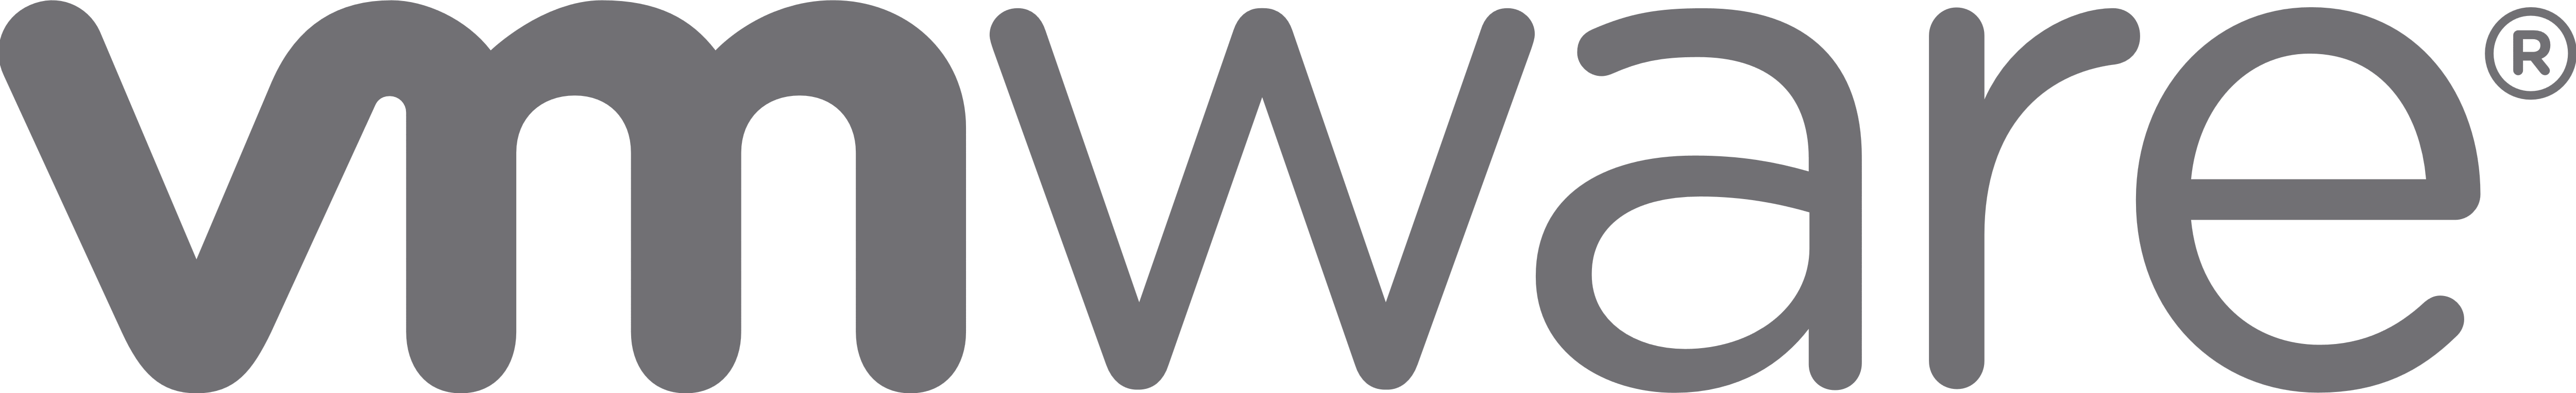 vmware symbol png logo #6474